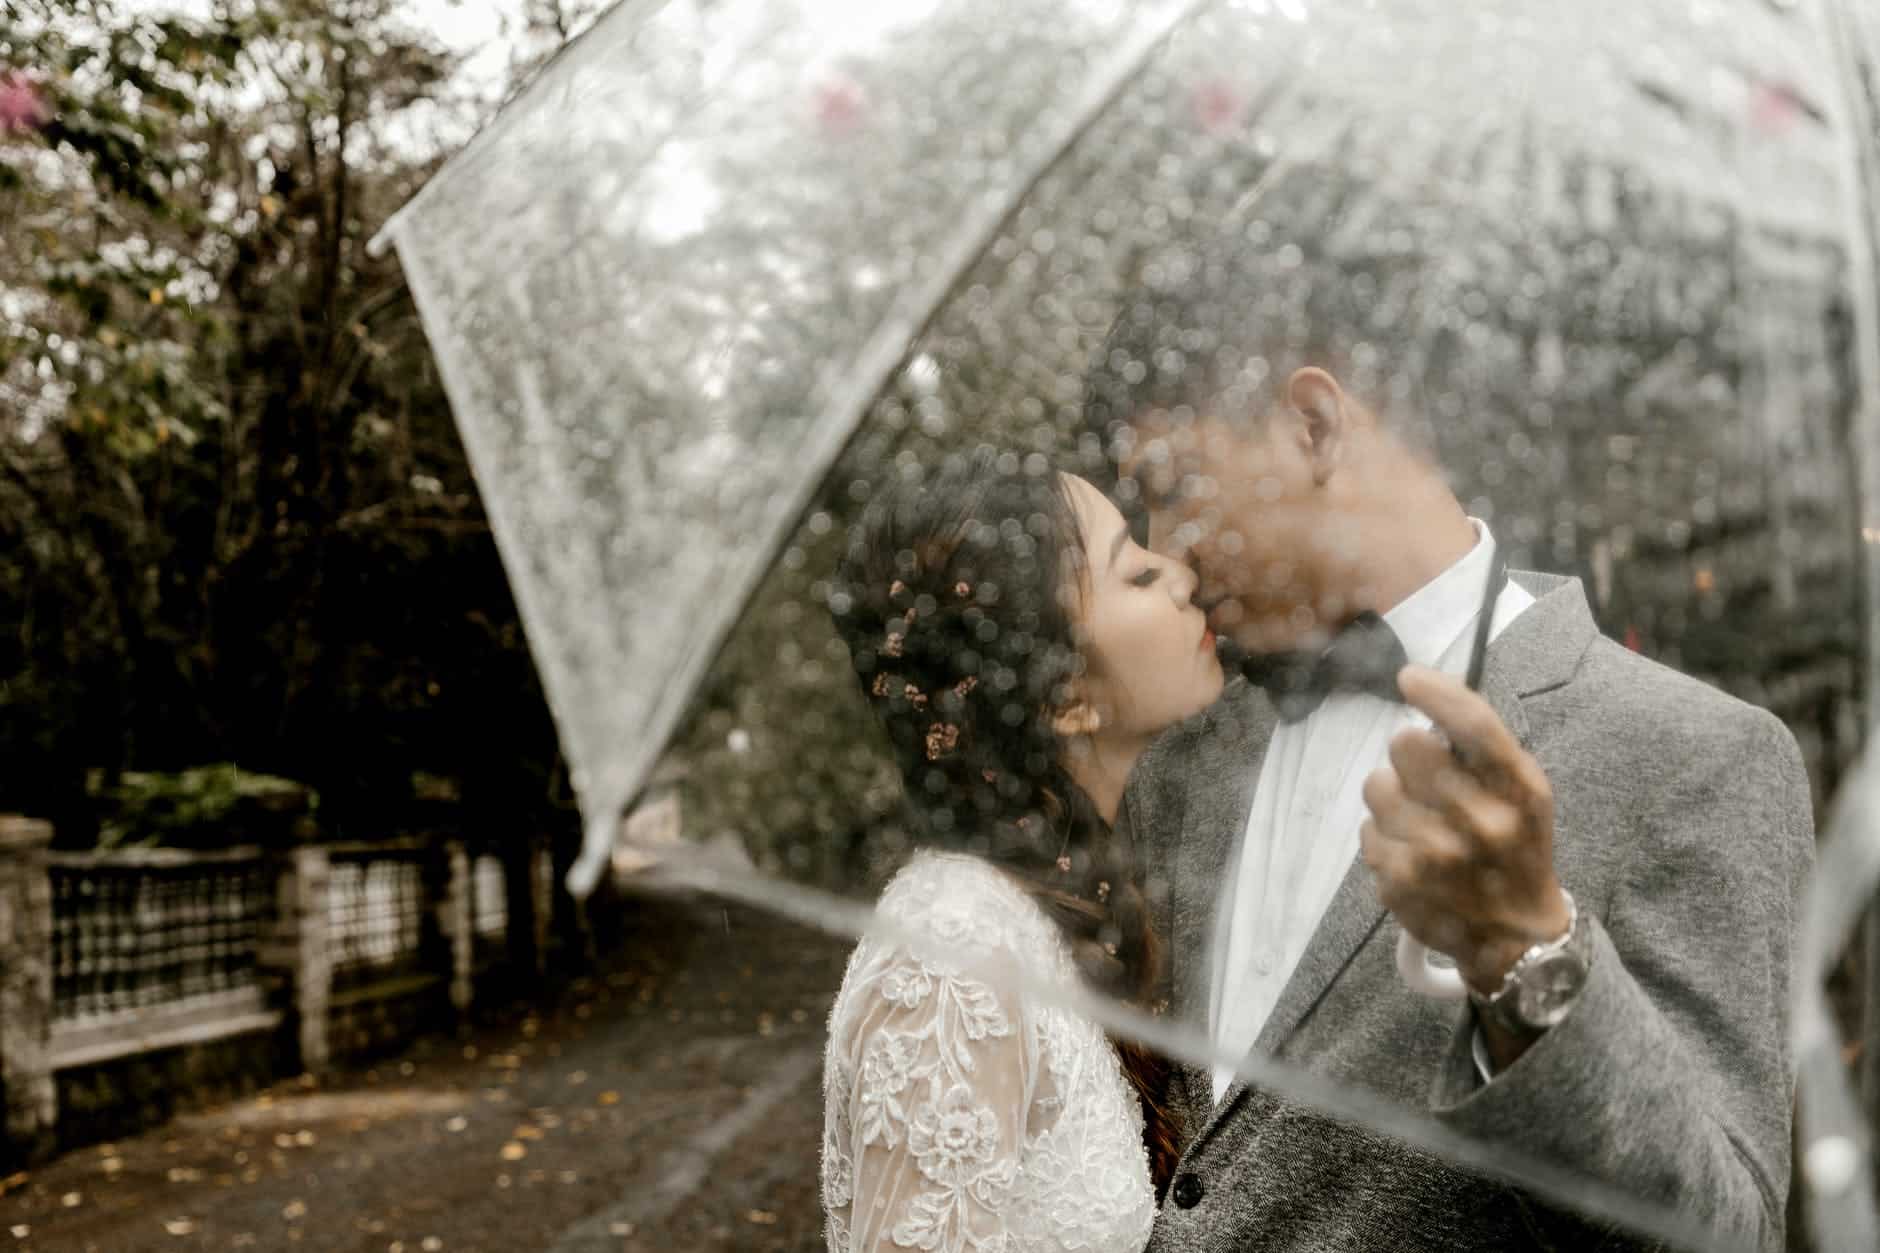 couple kissing under umbrella